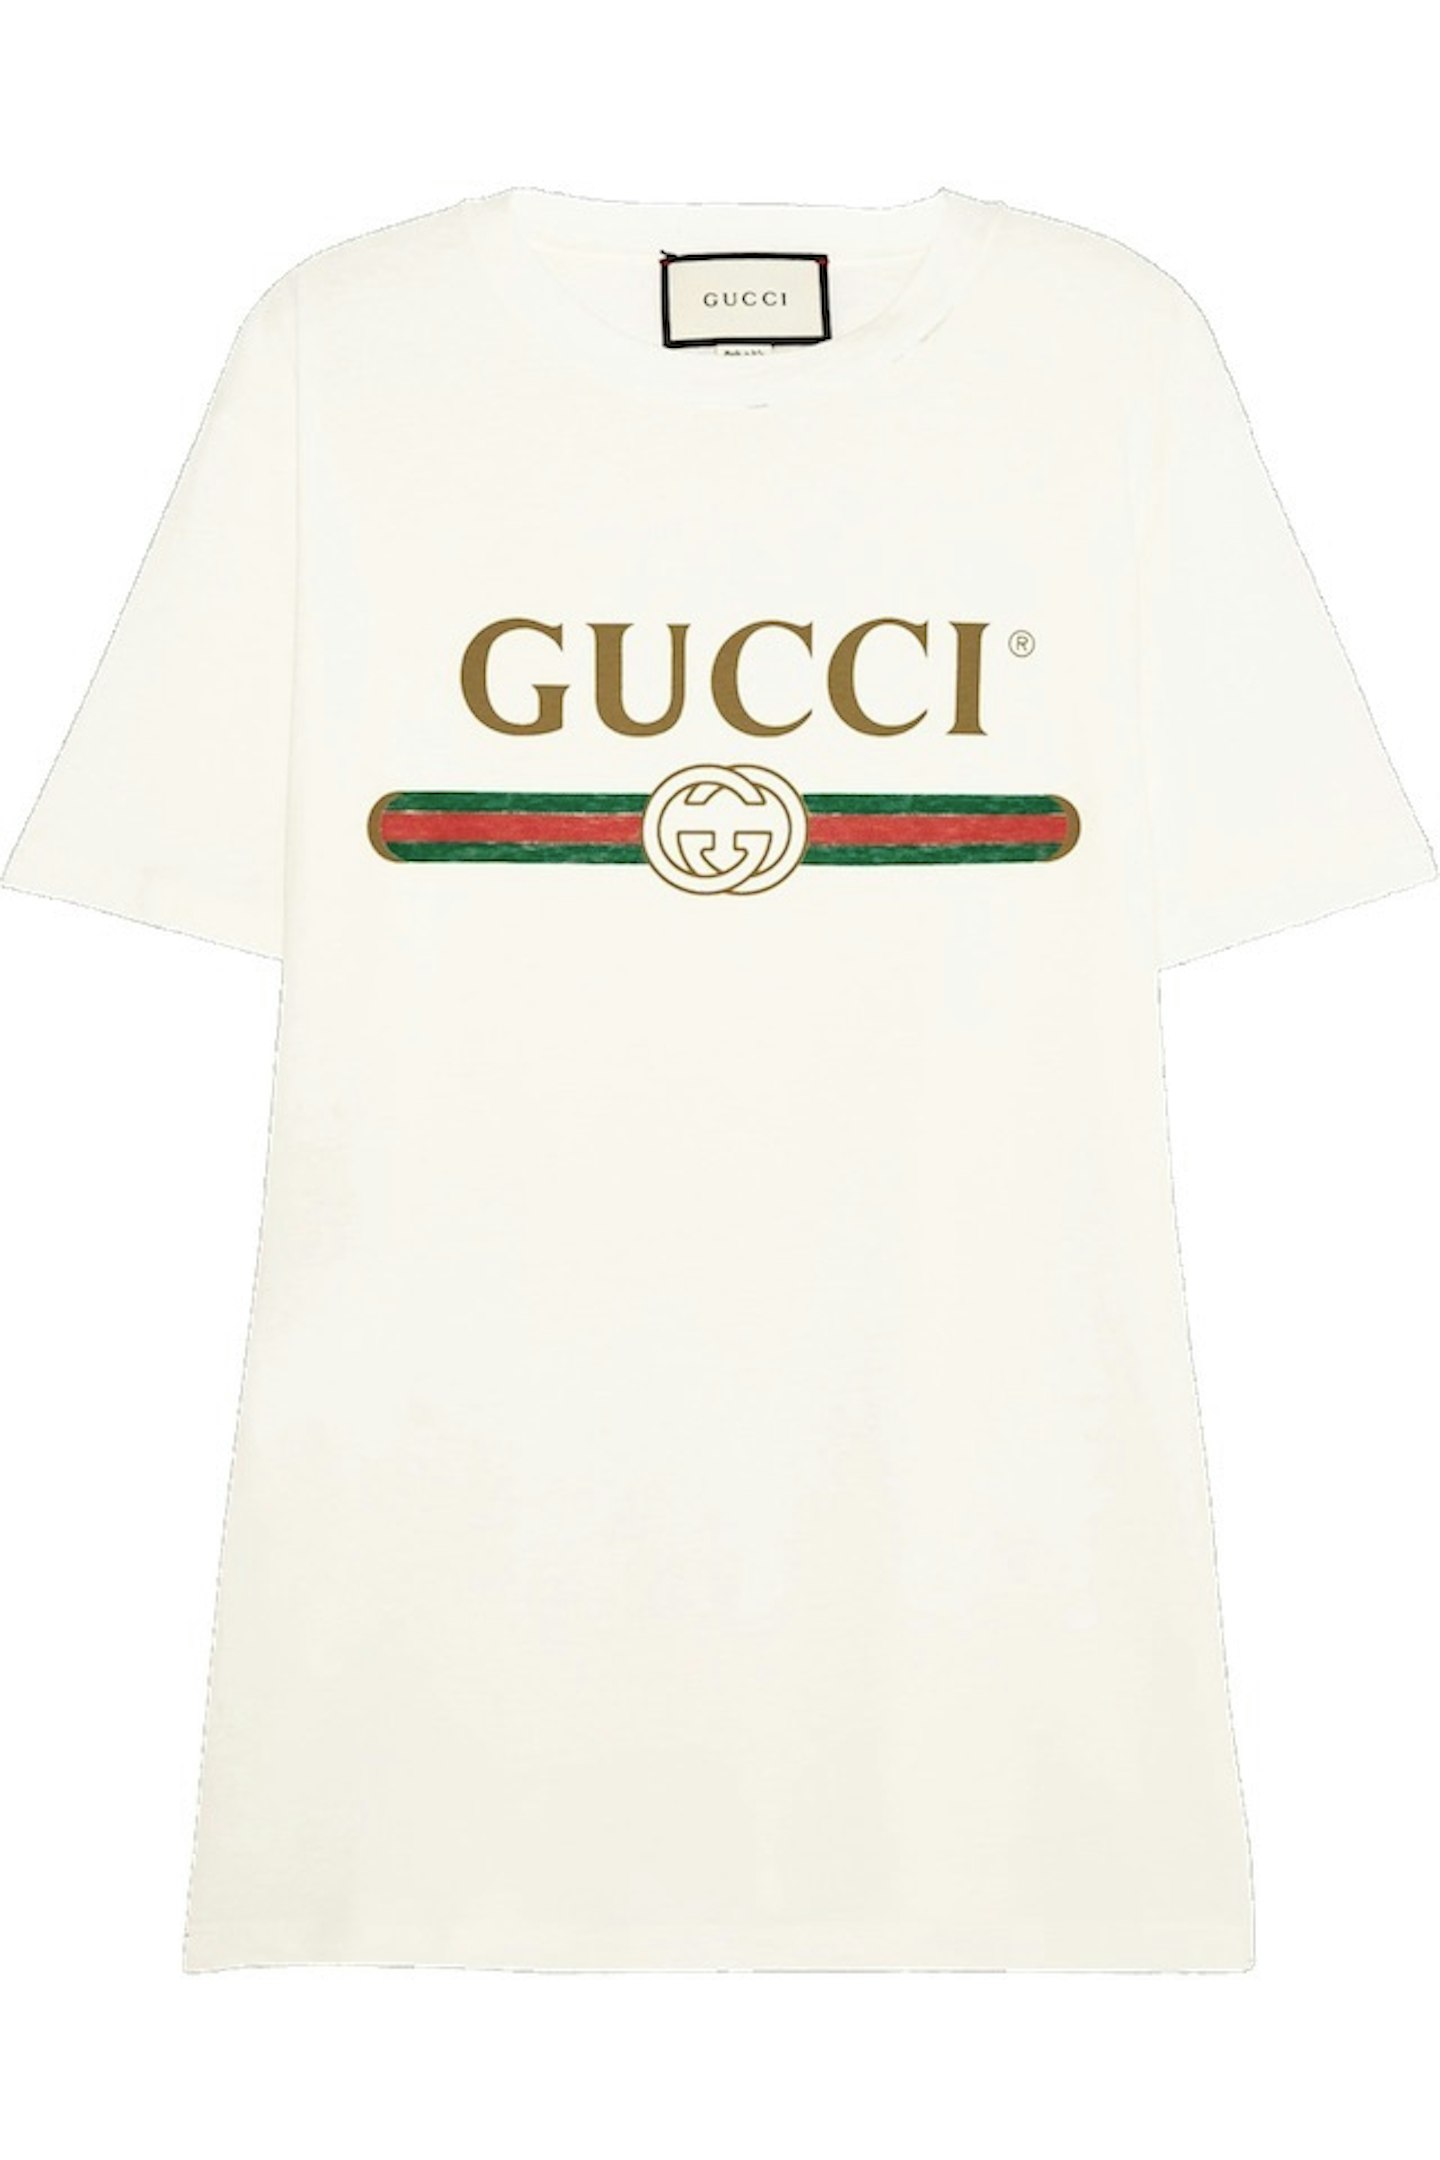 Gucci logo tee